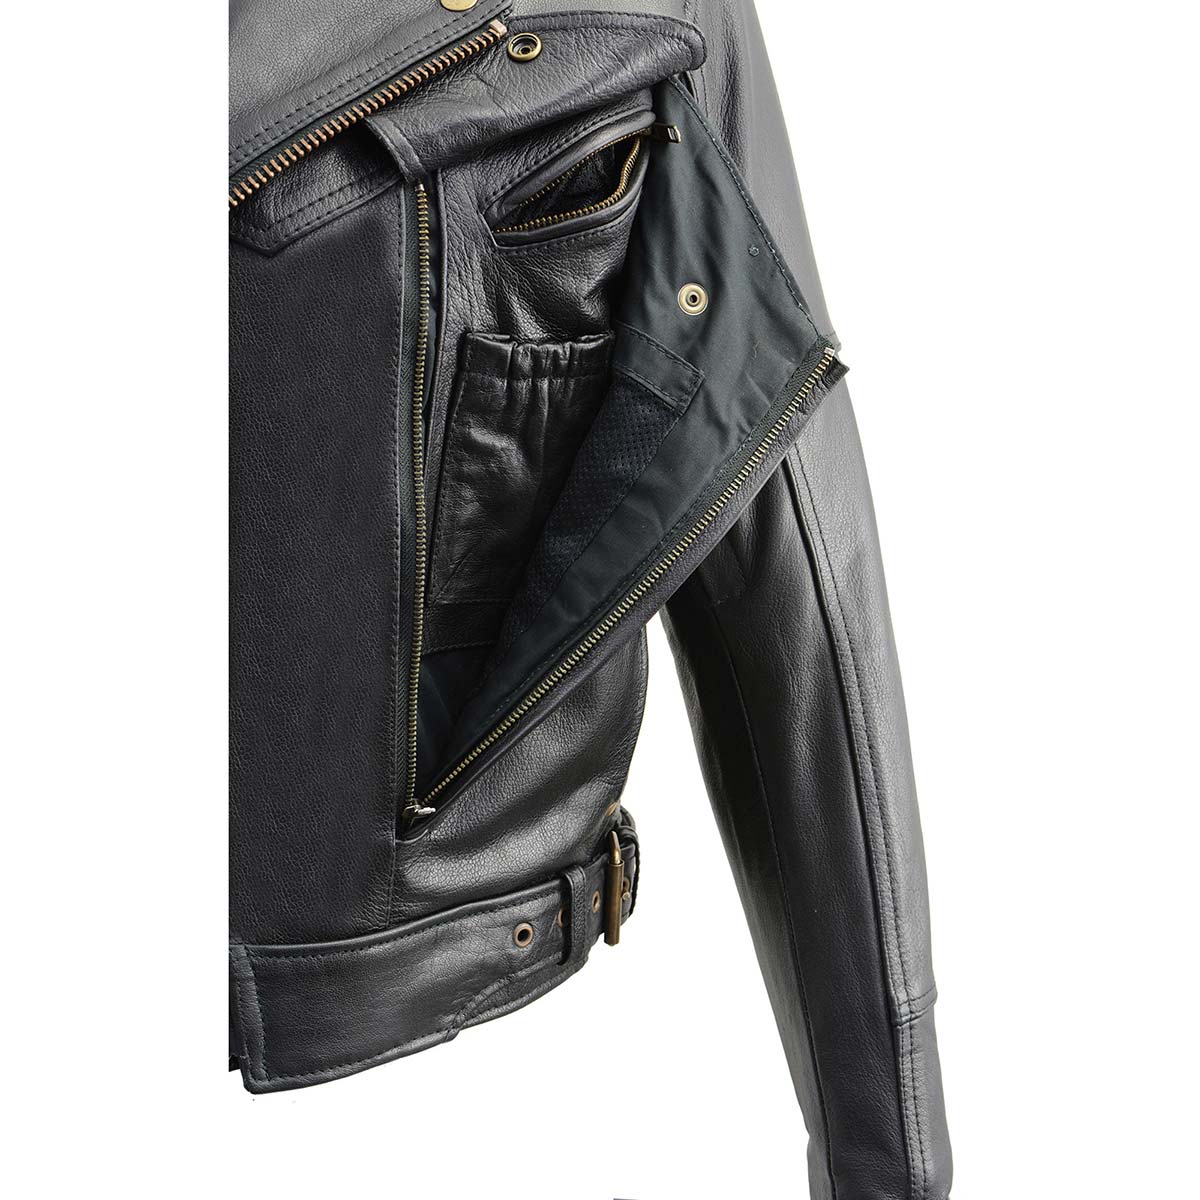 Black Genuine Leather Motorcycle Jacket for Men, 1.3mm Thick Police Style Biker Jacket